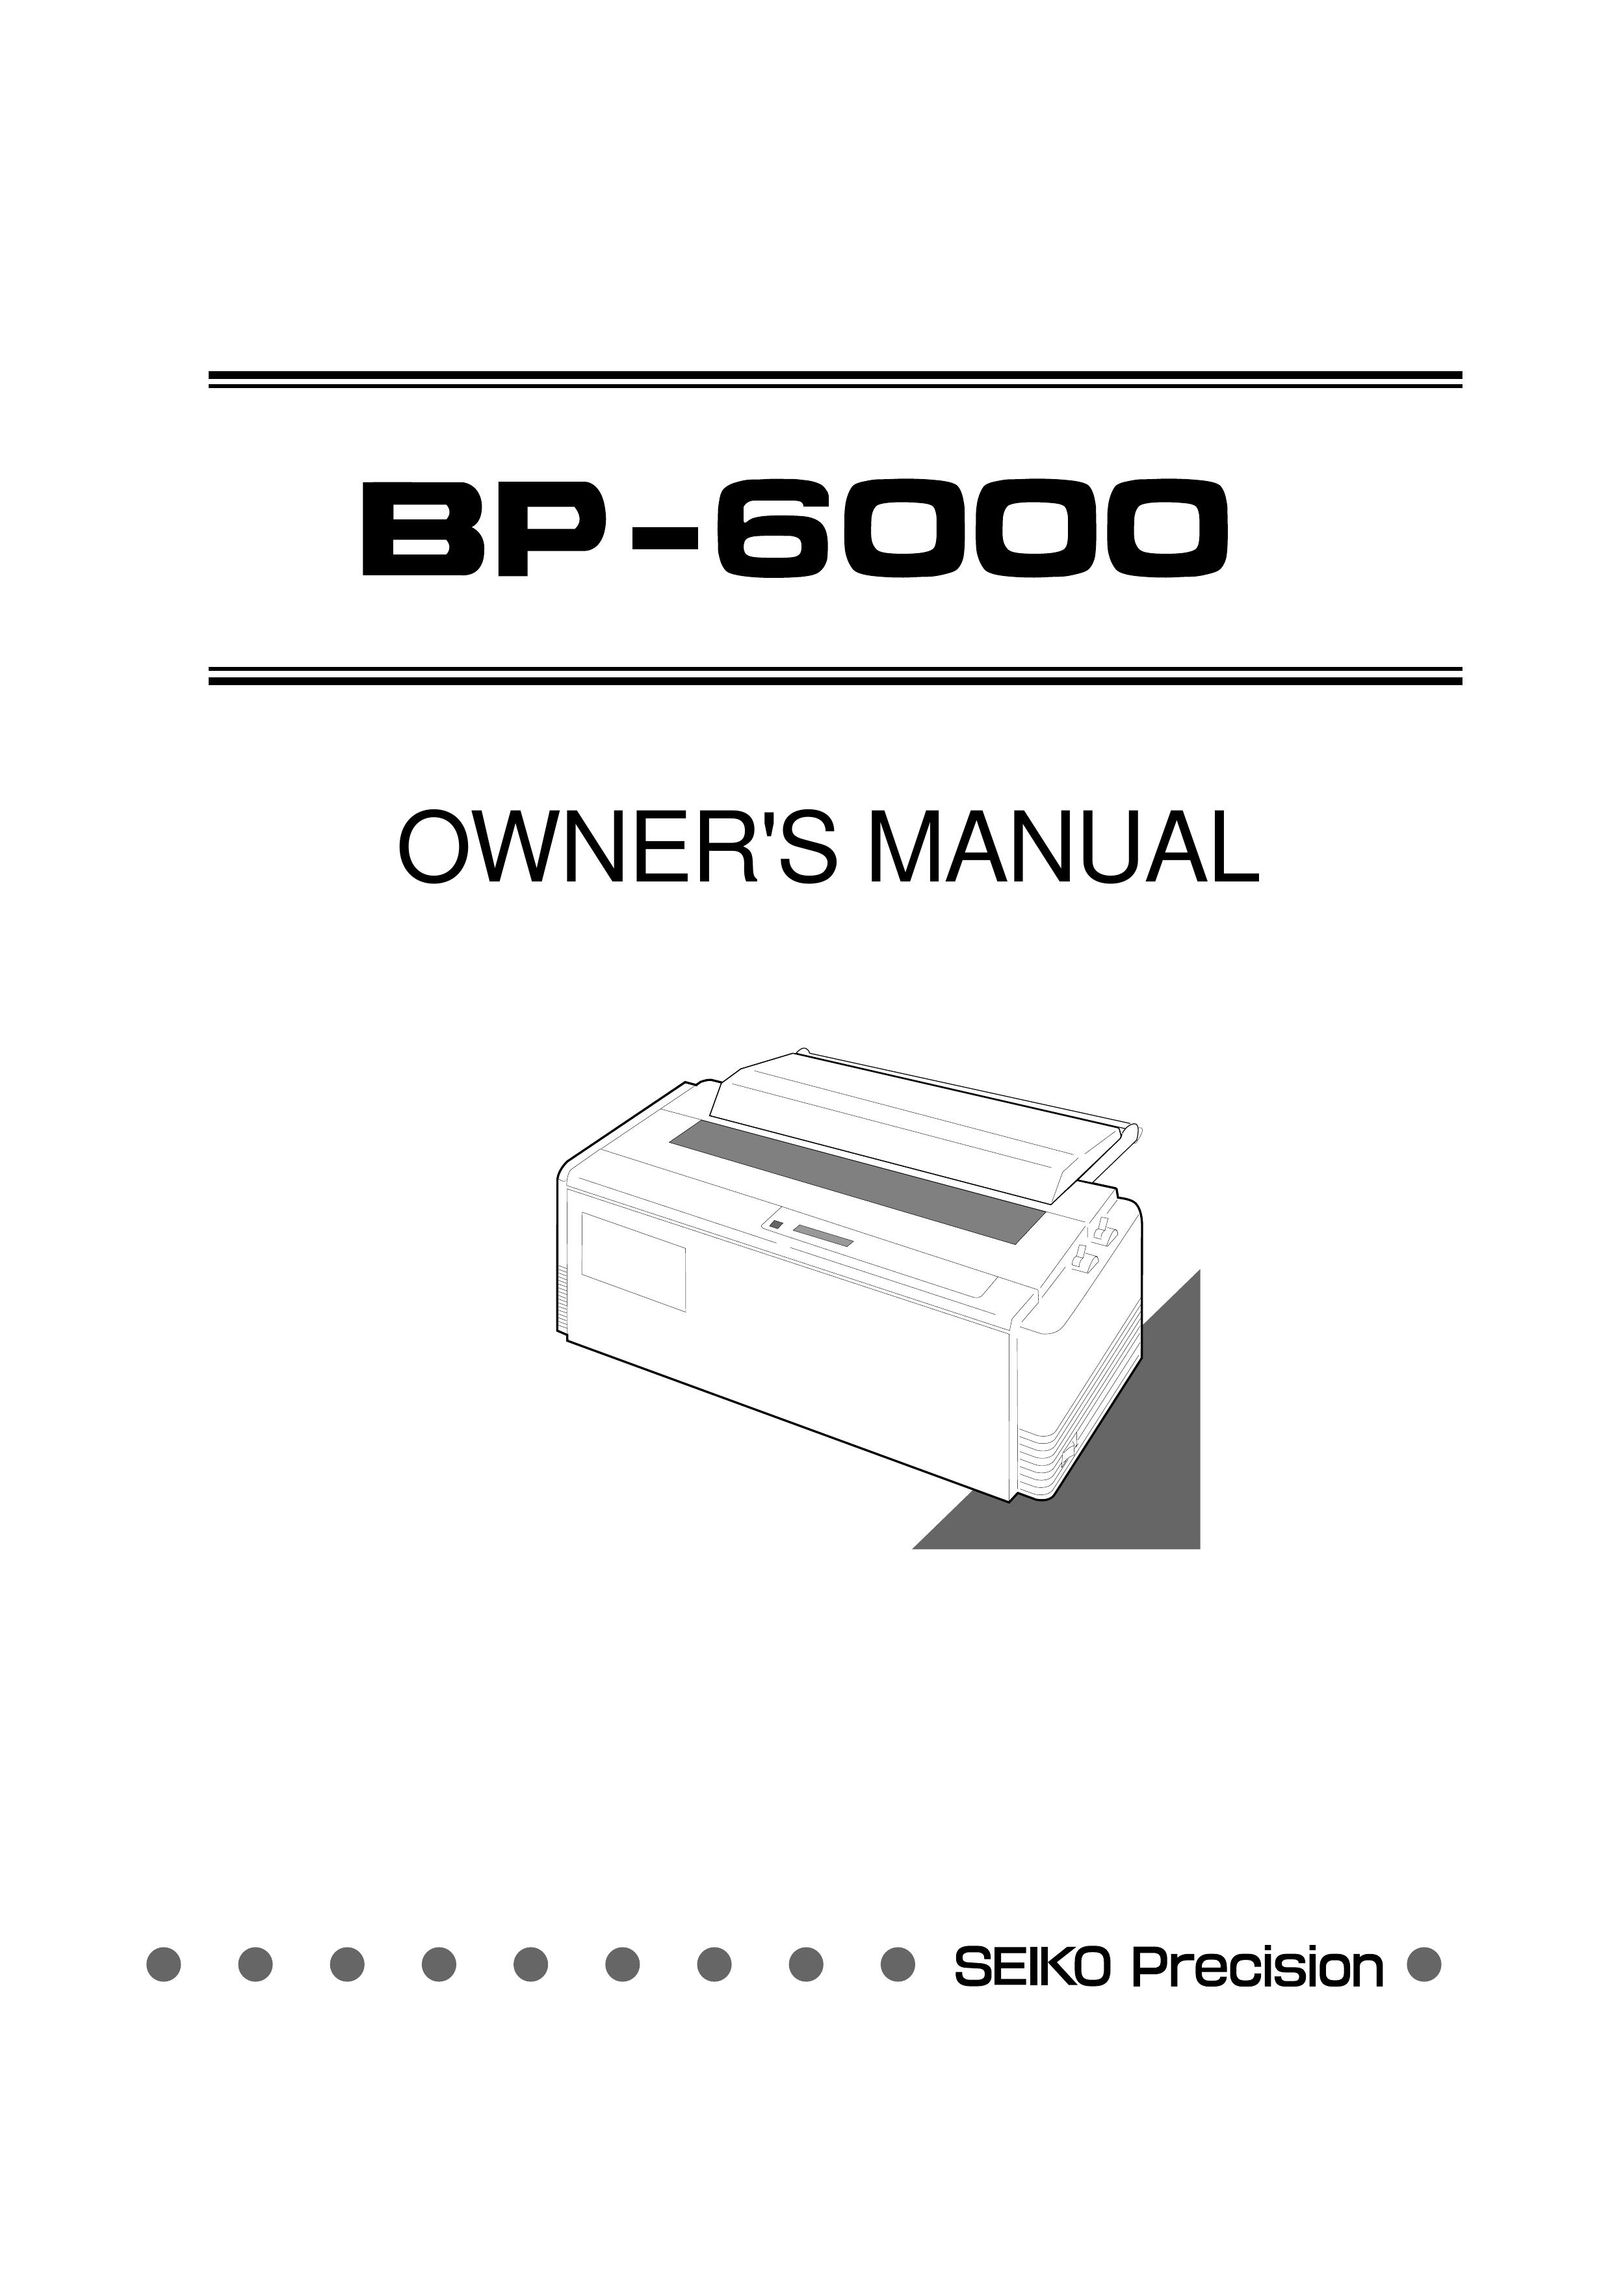 Seiko Group BP-6000 Printer User Manual